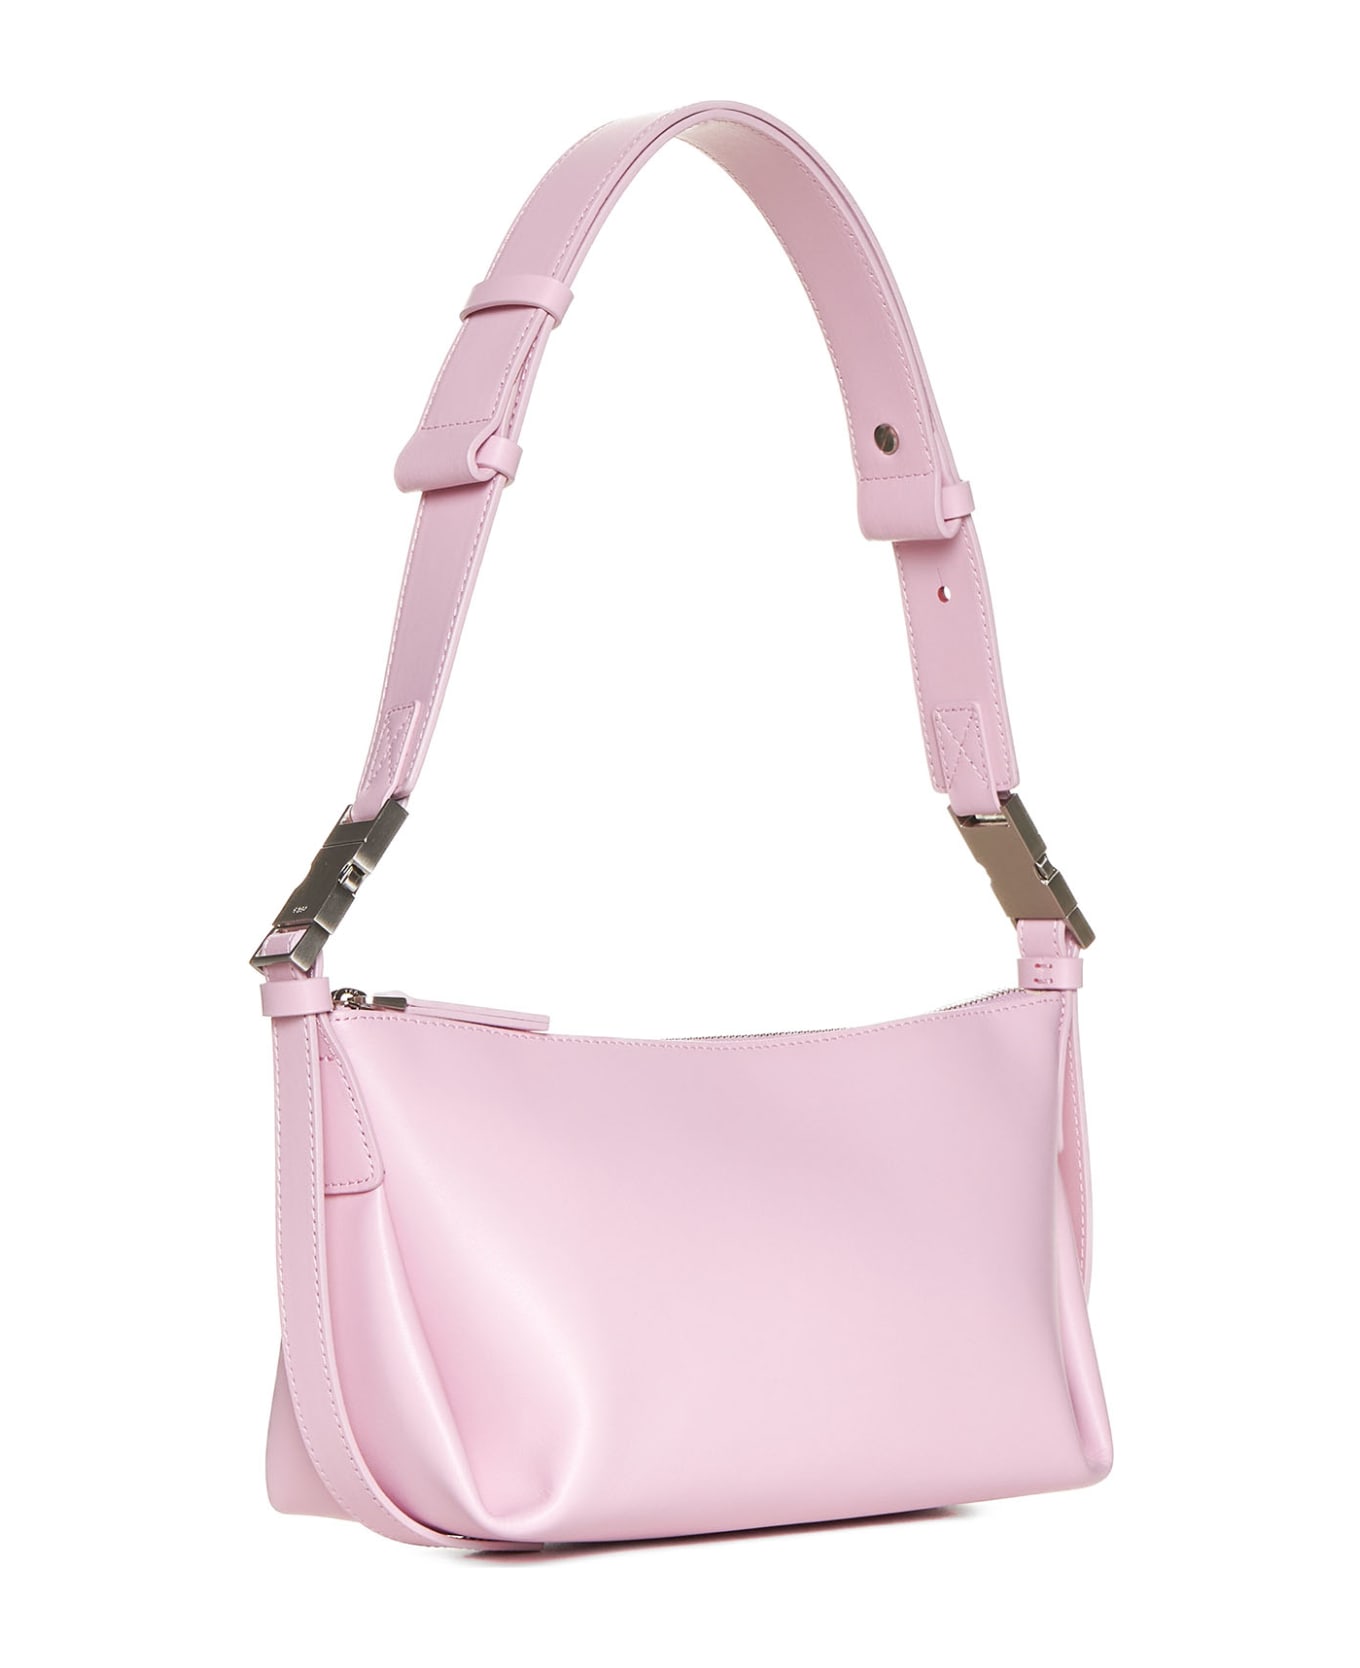 OSOI Shoulder Bag - Baby pink ショルダーバッグ